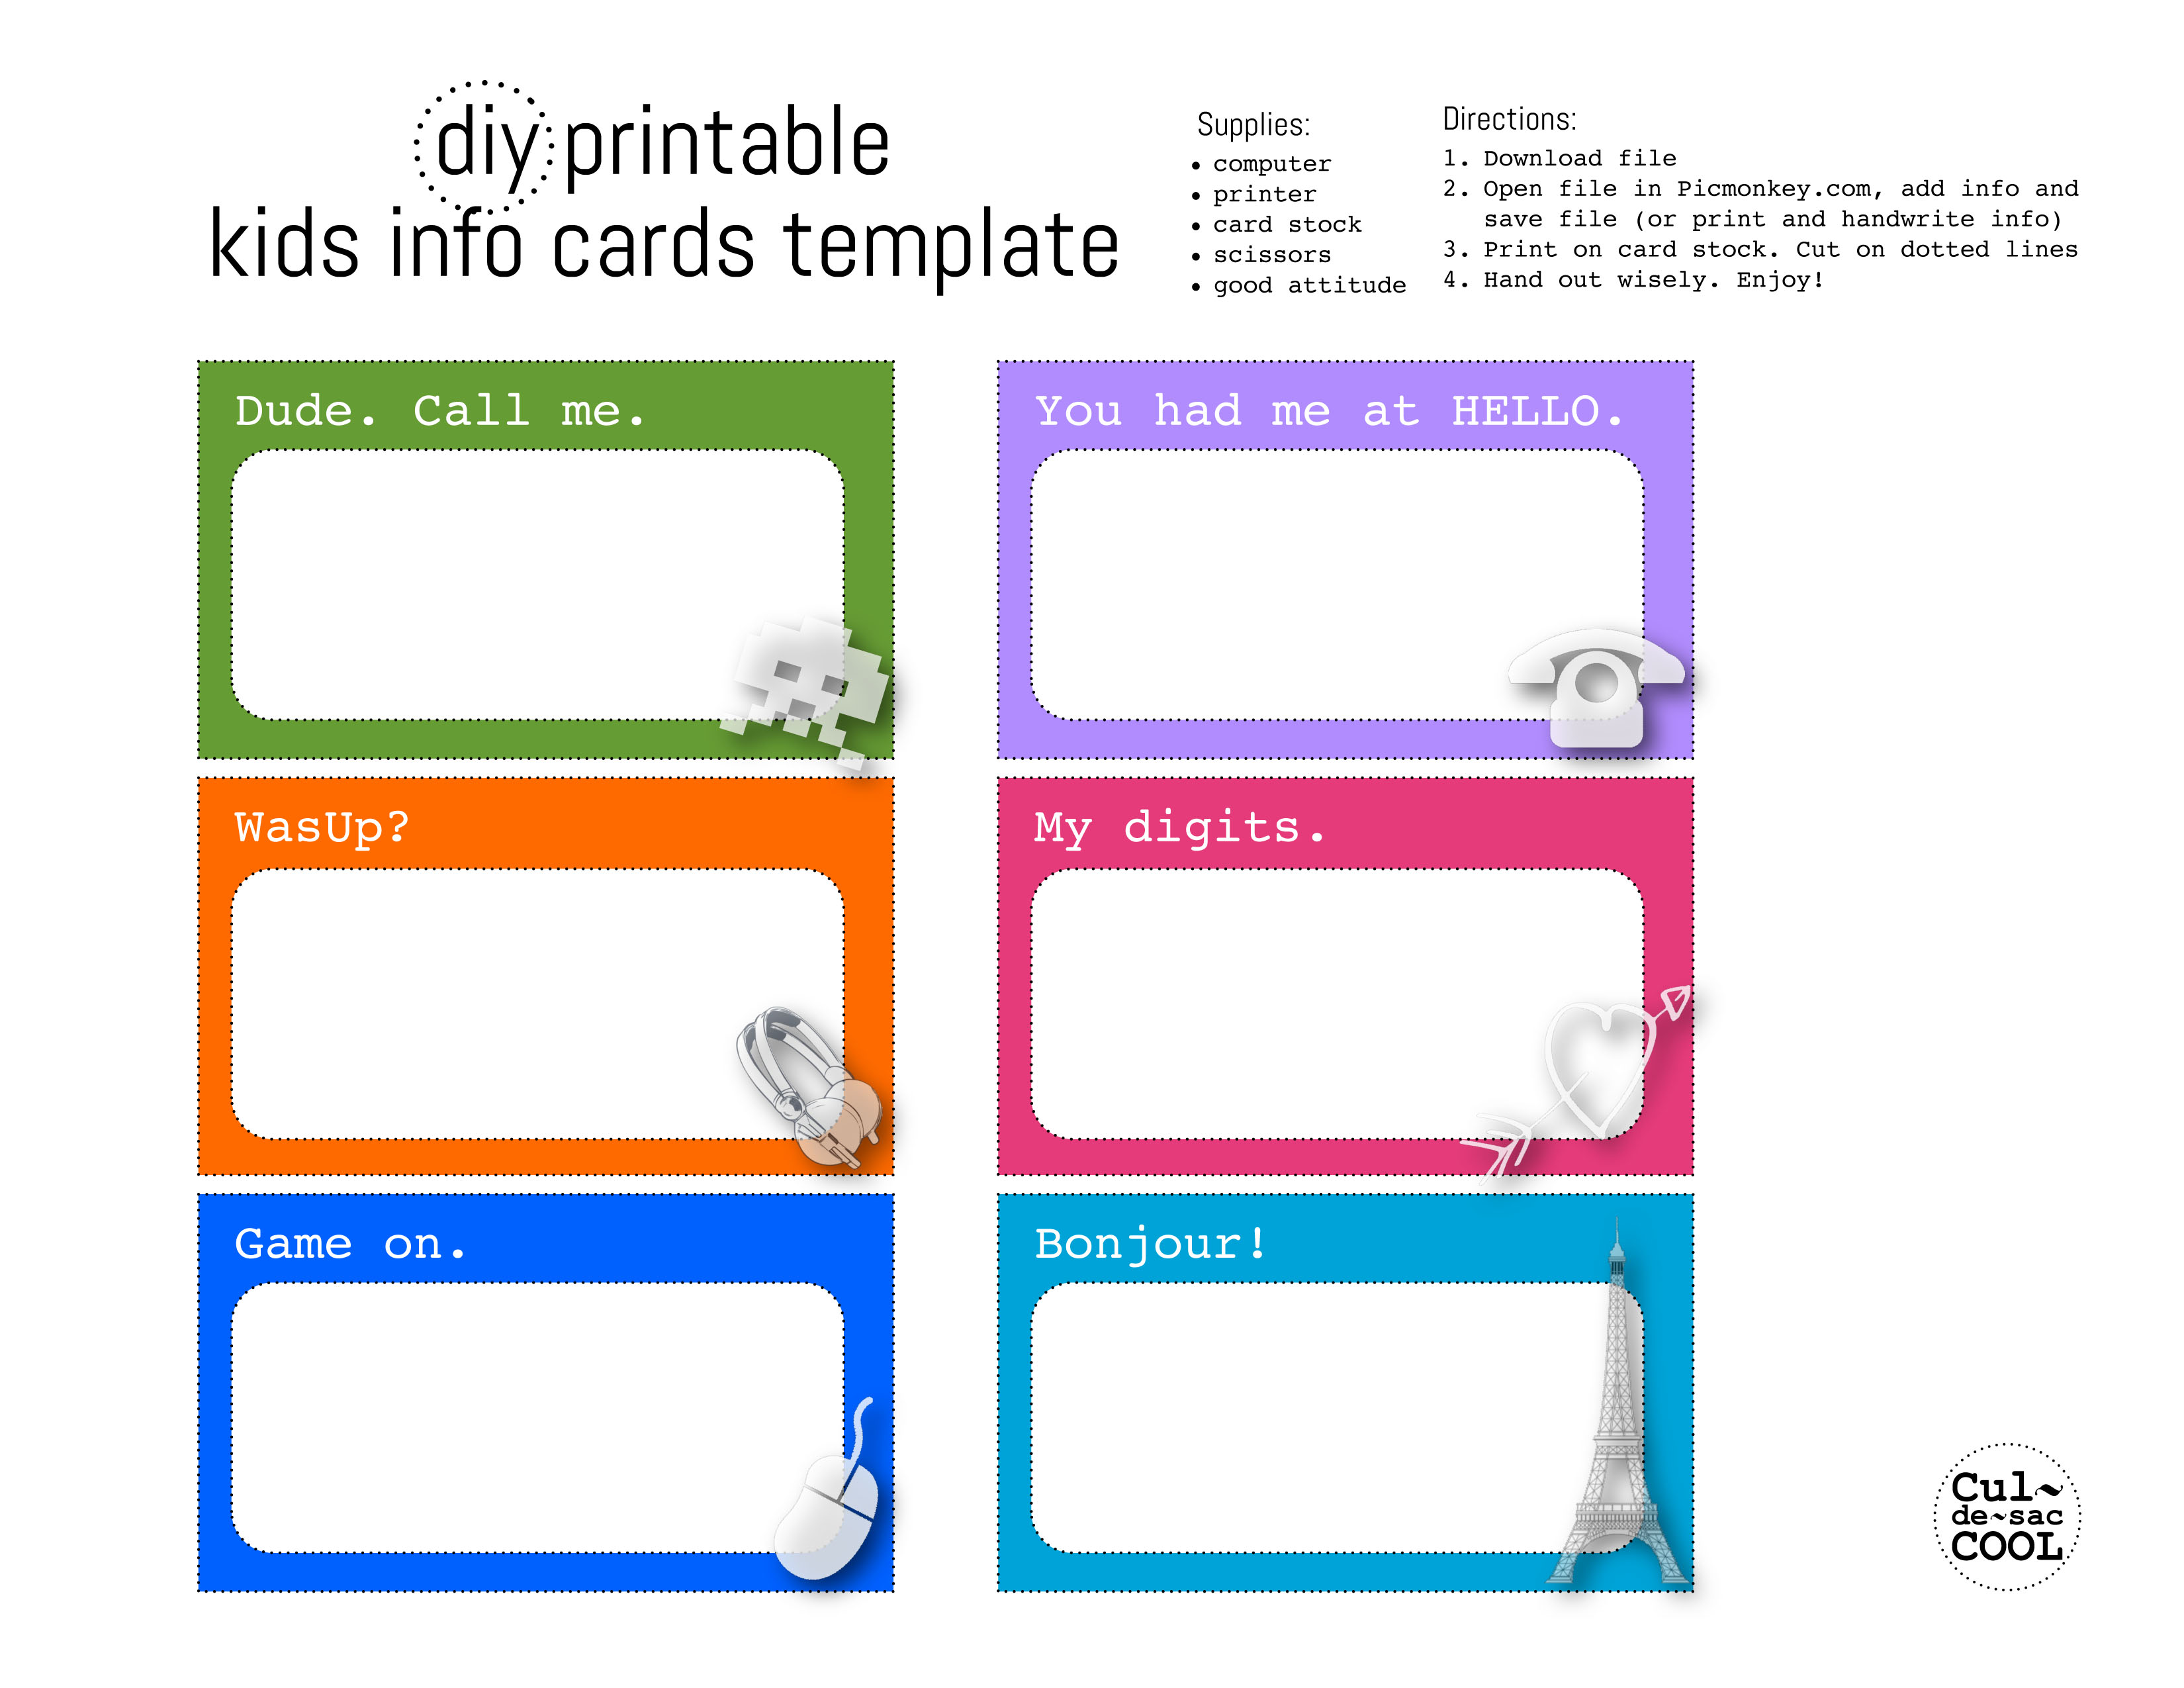 diy-printable-kids-info-cards-template